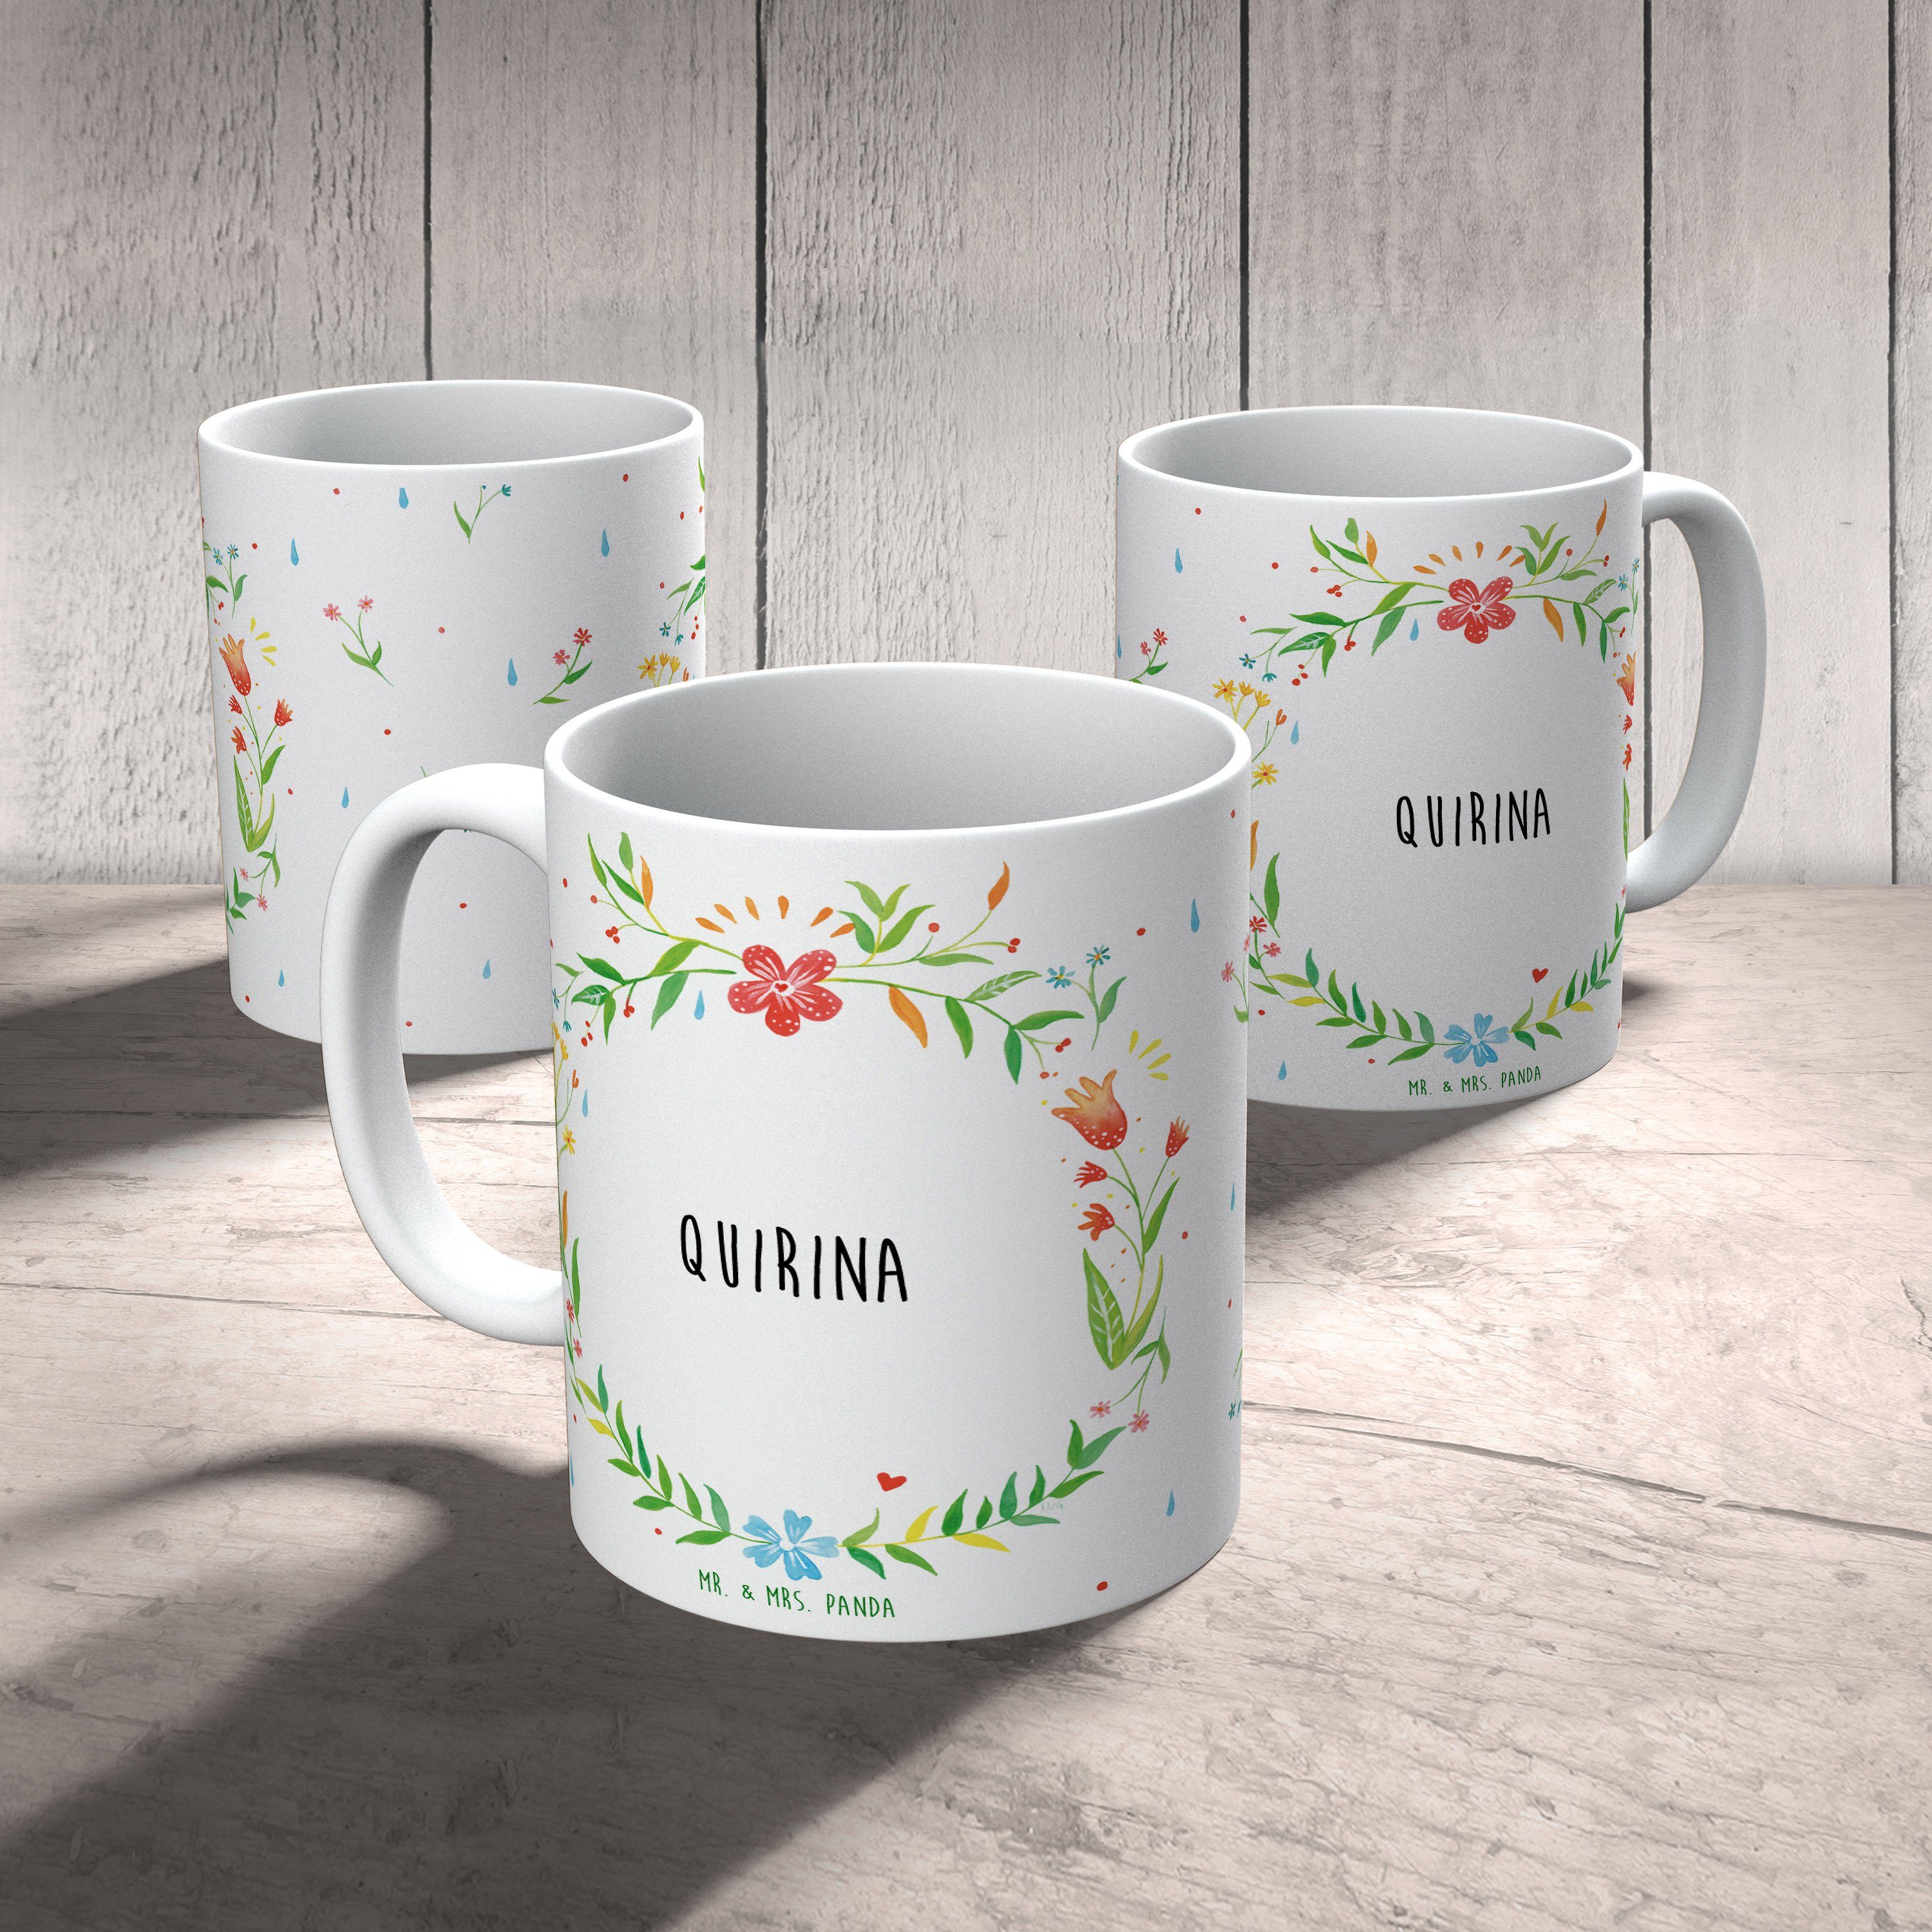 Mr. Keramiktasse, - Kaffeetasse, Geschenk, Tasse Teebech, Sprüche, Panda Quirina Mrs. Tasse & Keramik